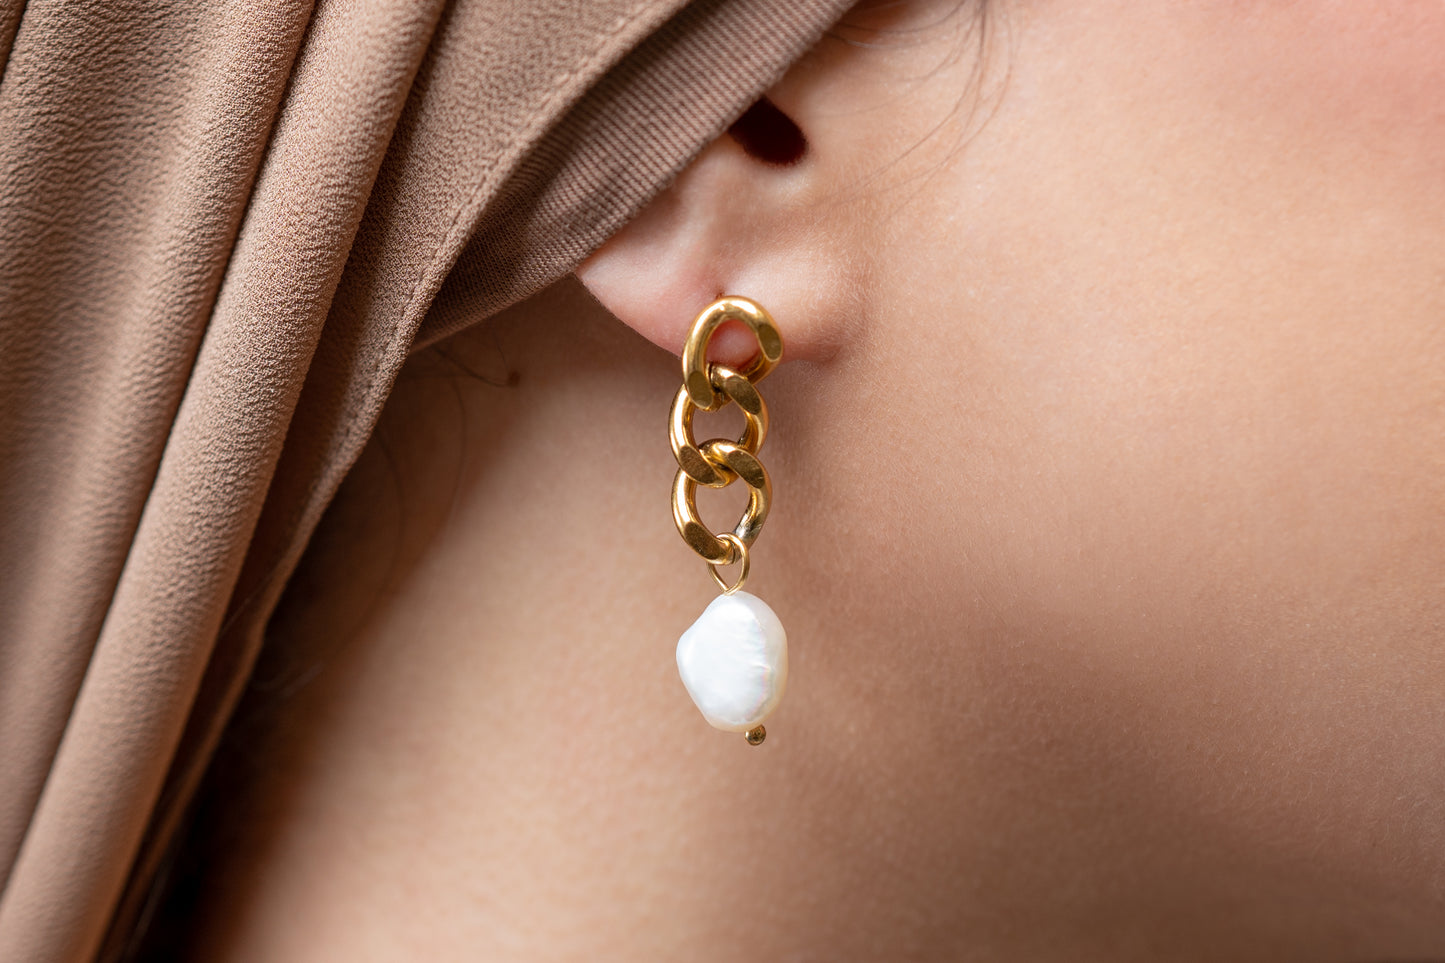 harma jewelry 24k gold plated Curb Chain Link Stud Earrings